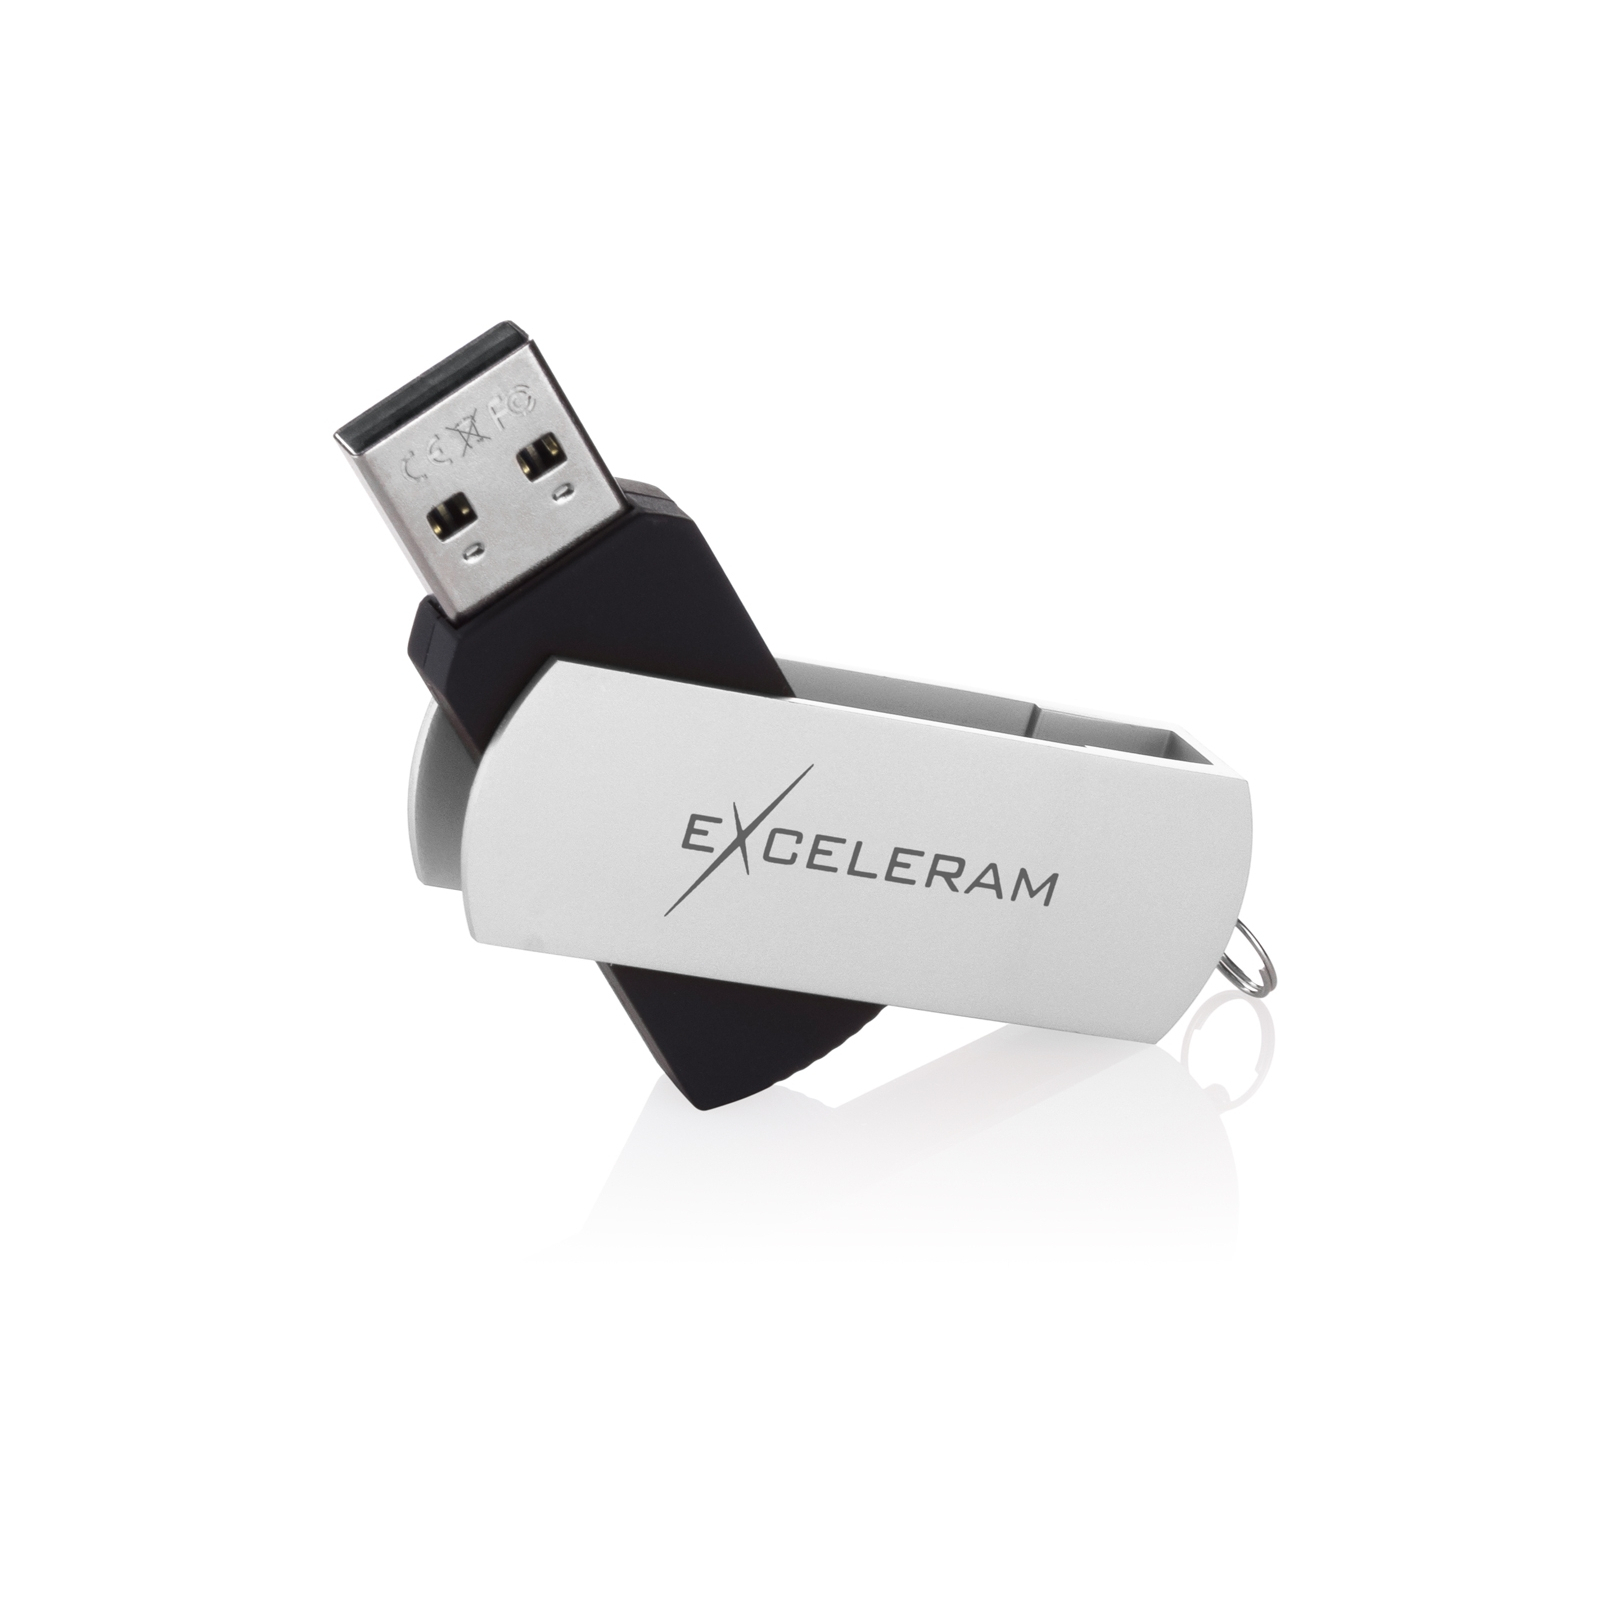 USB флеш накопитель eXceleram 16GB P2 Series Rose/Black USB 2.0 (EXP2U2ROB16) изображение 3